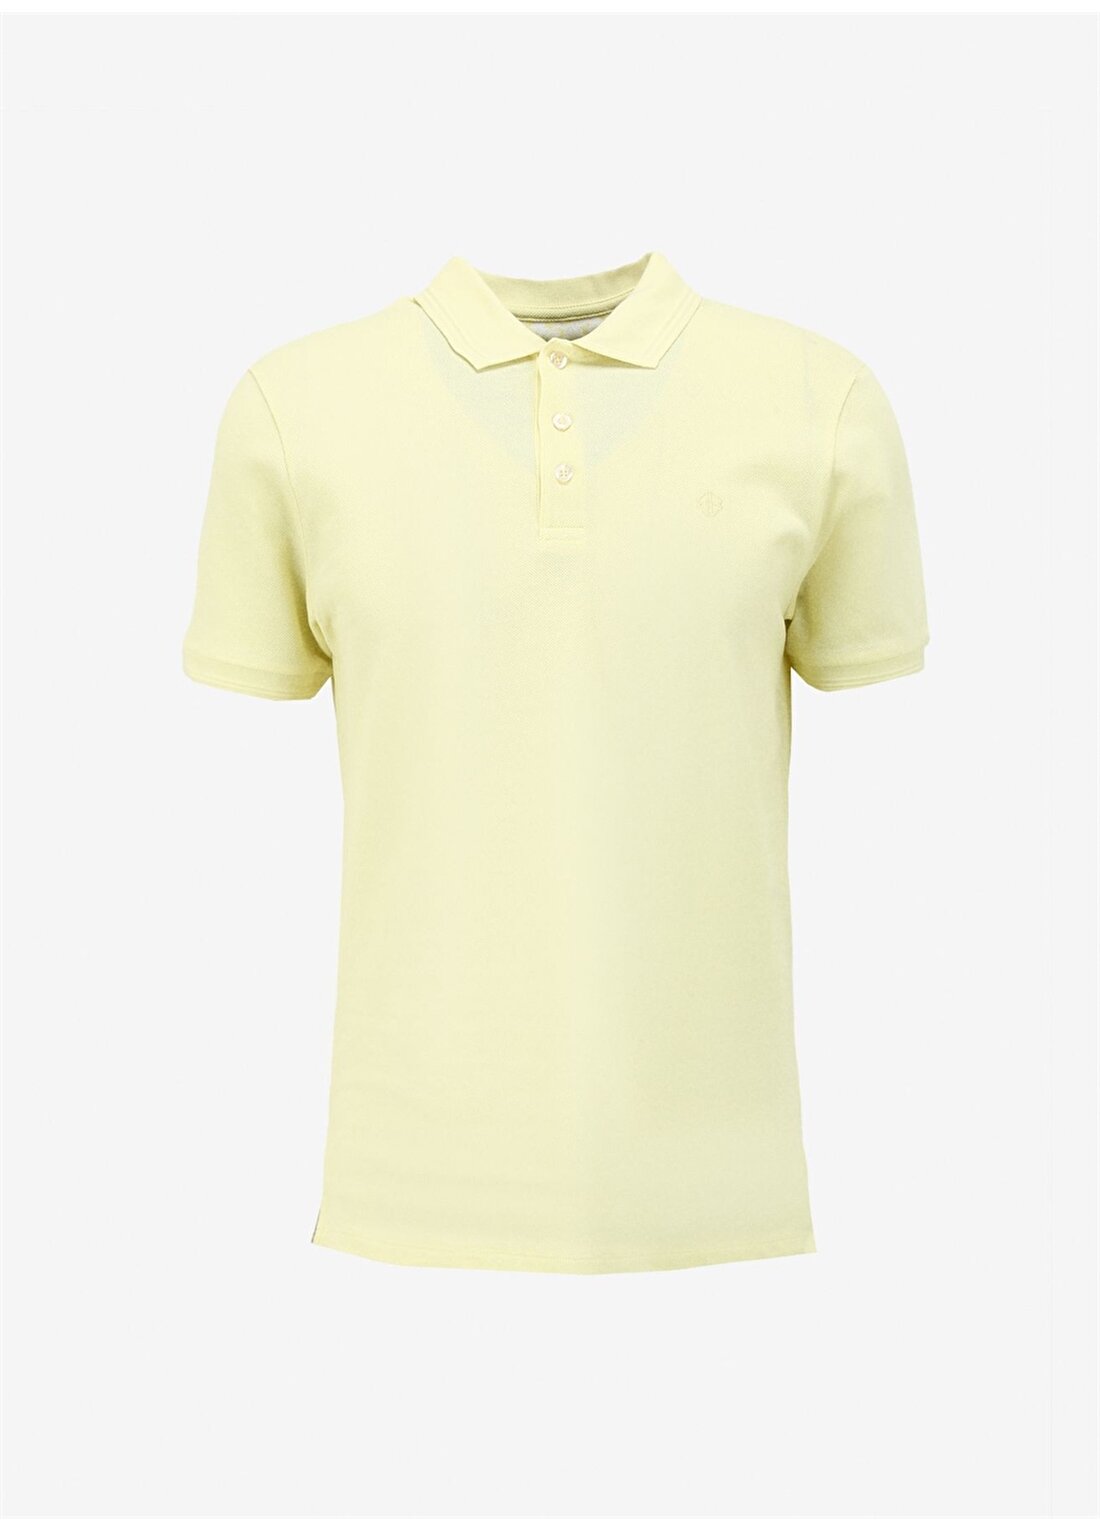 Beymen Business Sarı Erkek T-Shirt 4B4800000001